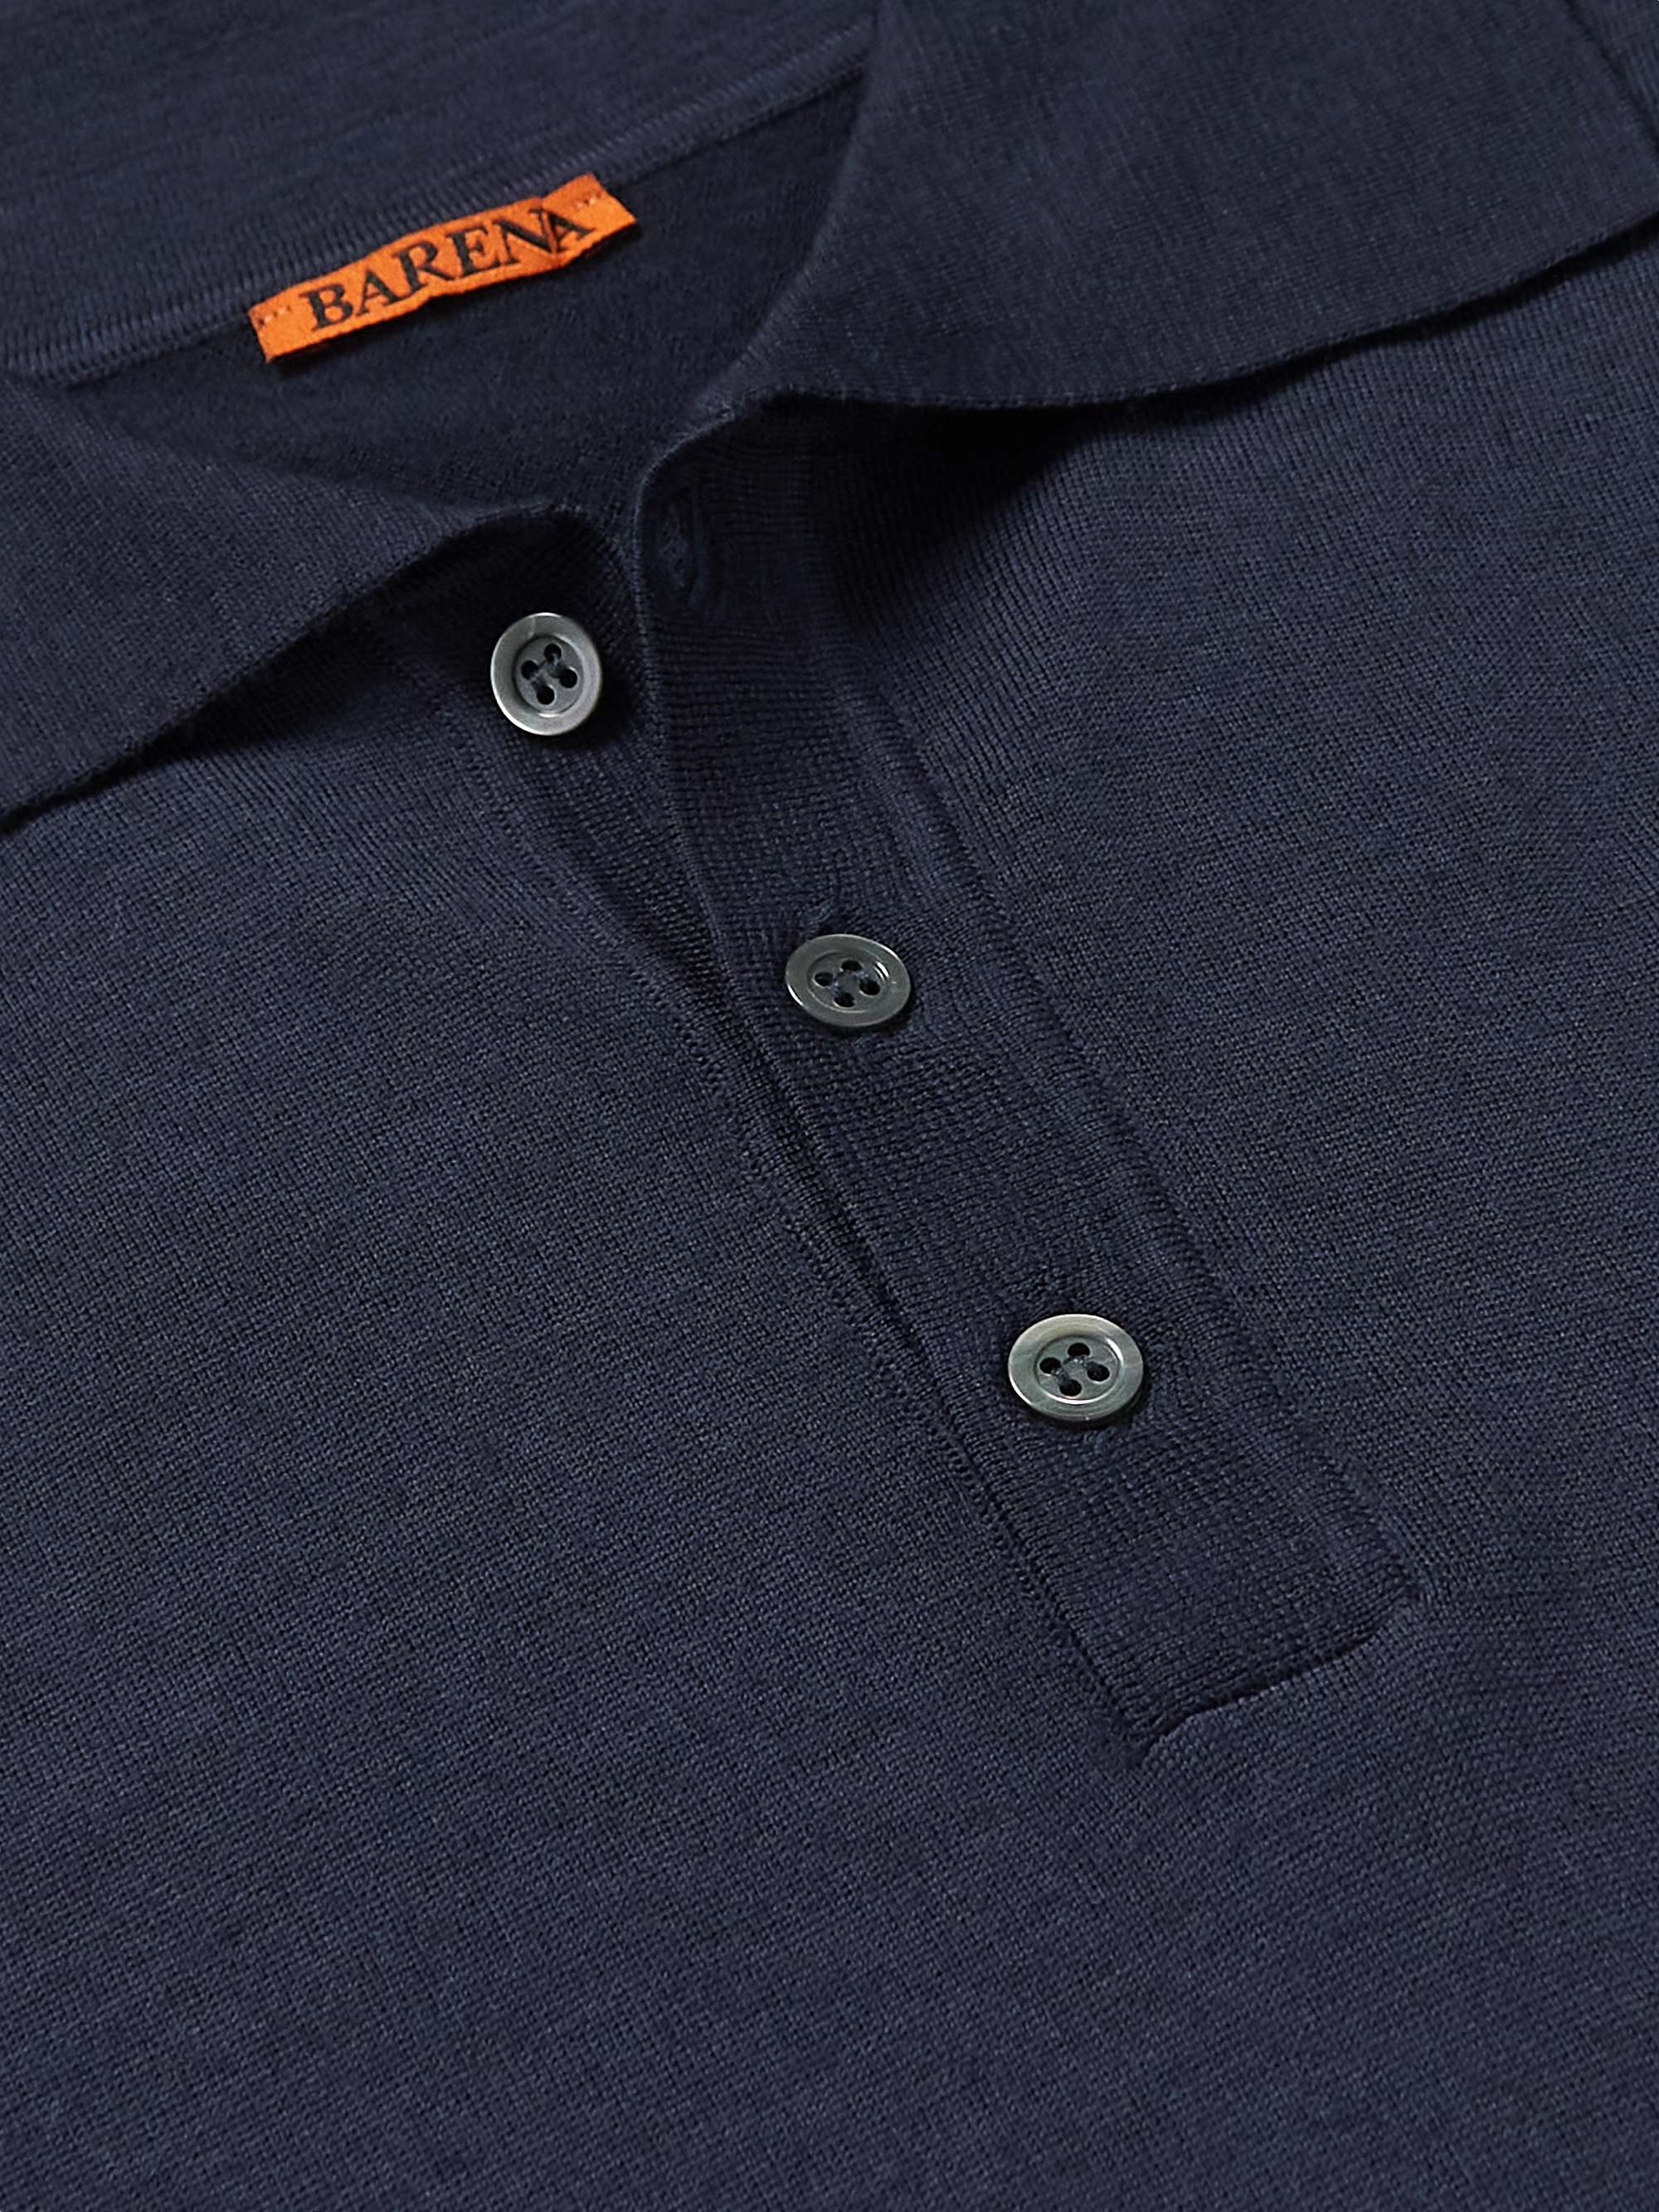 BARENA Slim-Fit Pevaron Merino Wool Polo Shirt